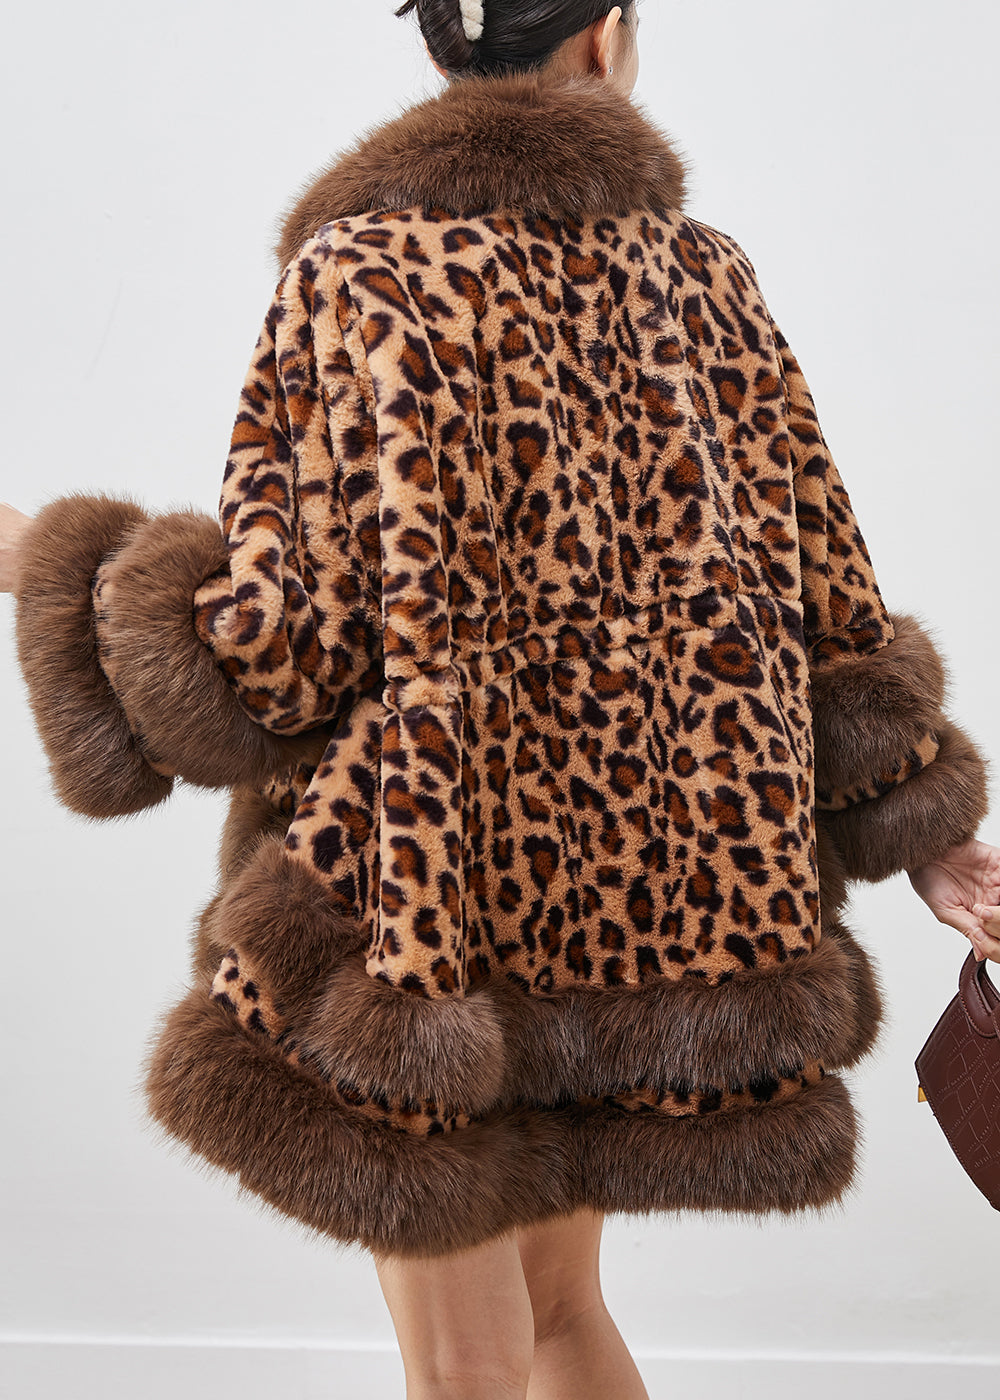 Leopard Print Faux Fur Coat Oversized Drawstring Winter